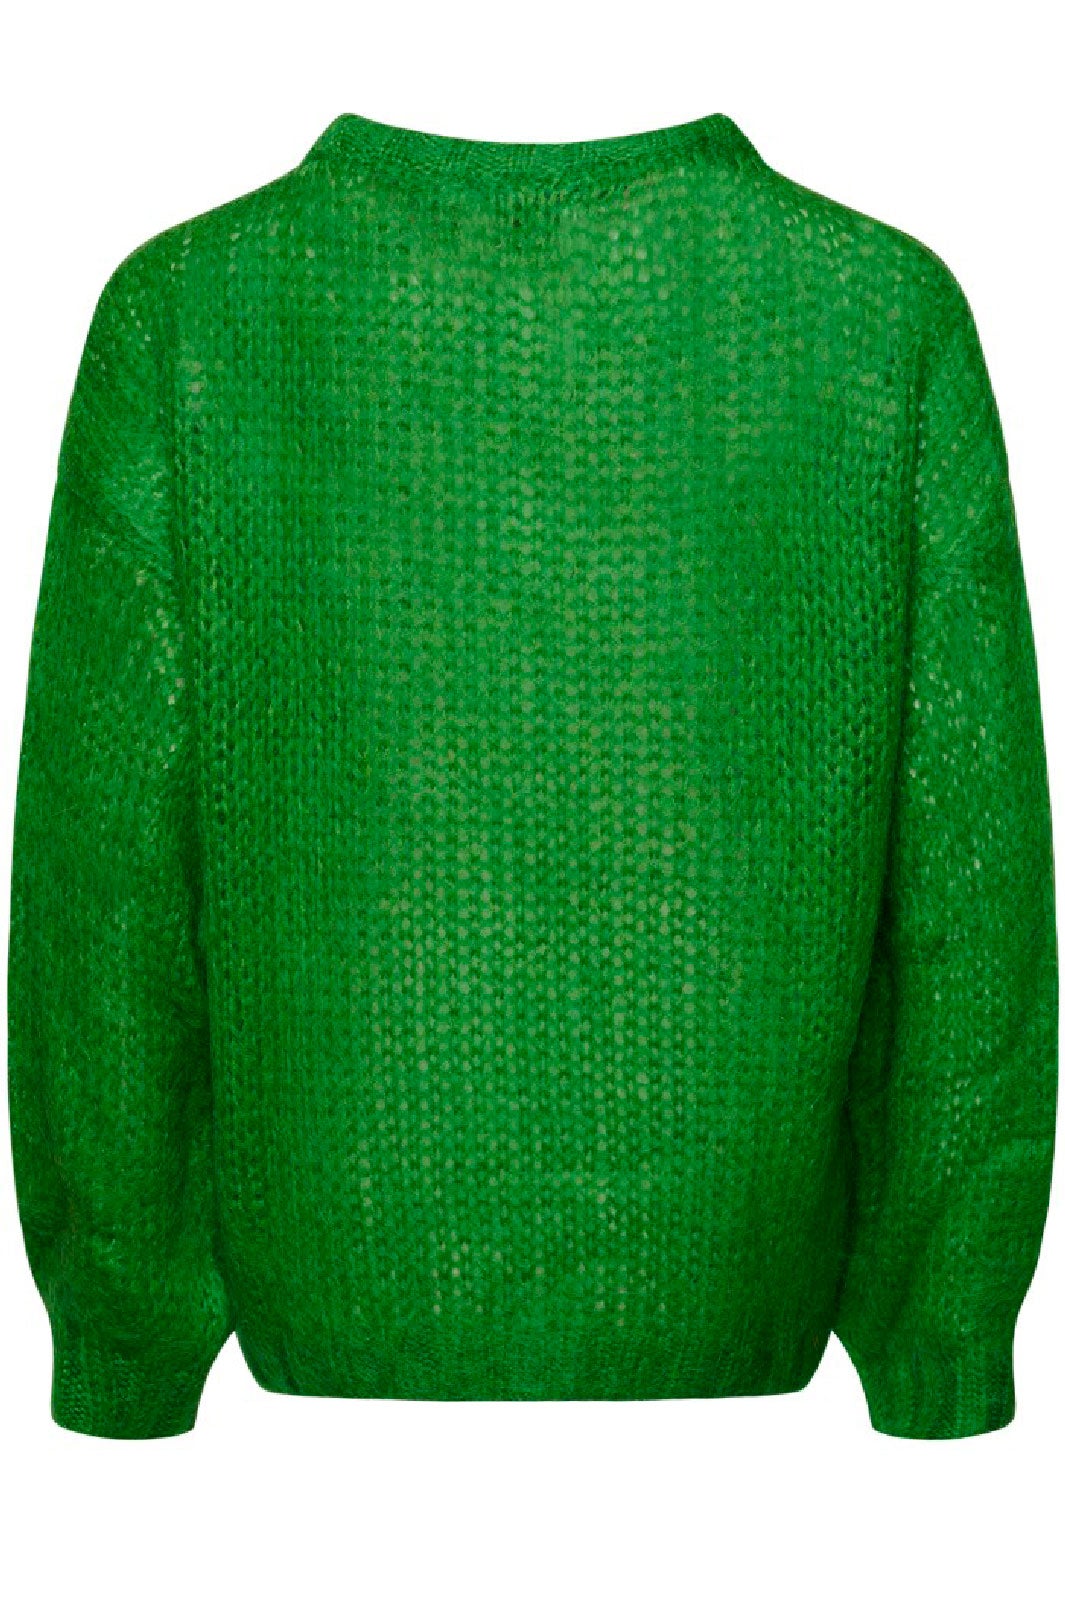 Noella - Delta Knit Sweater - Grass Green Cardigans 